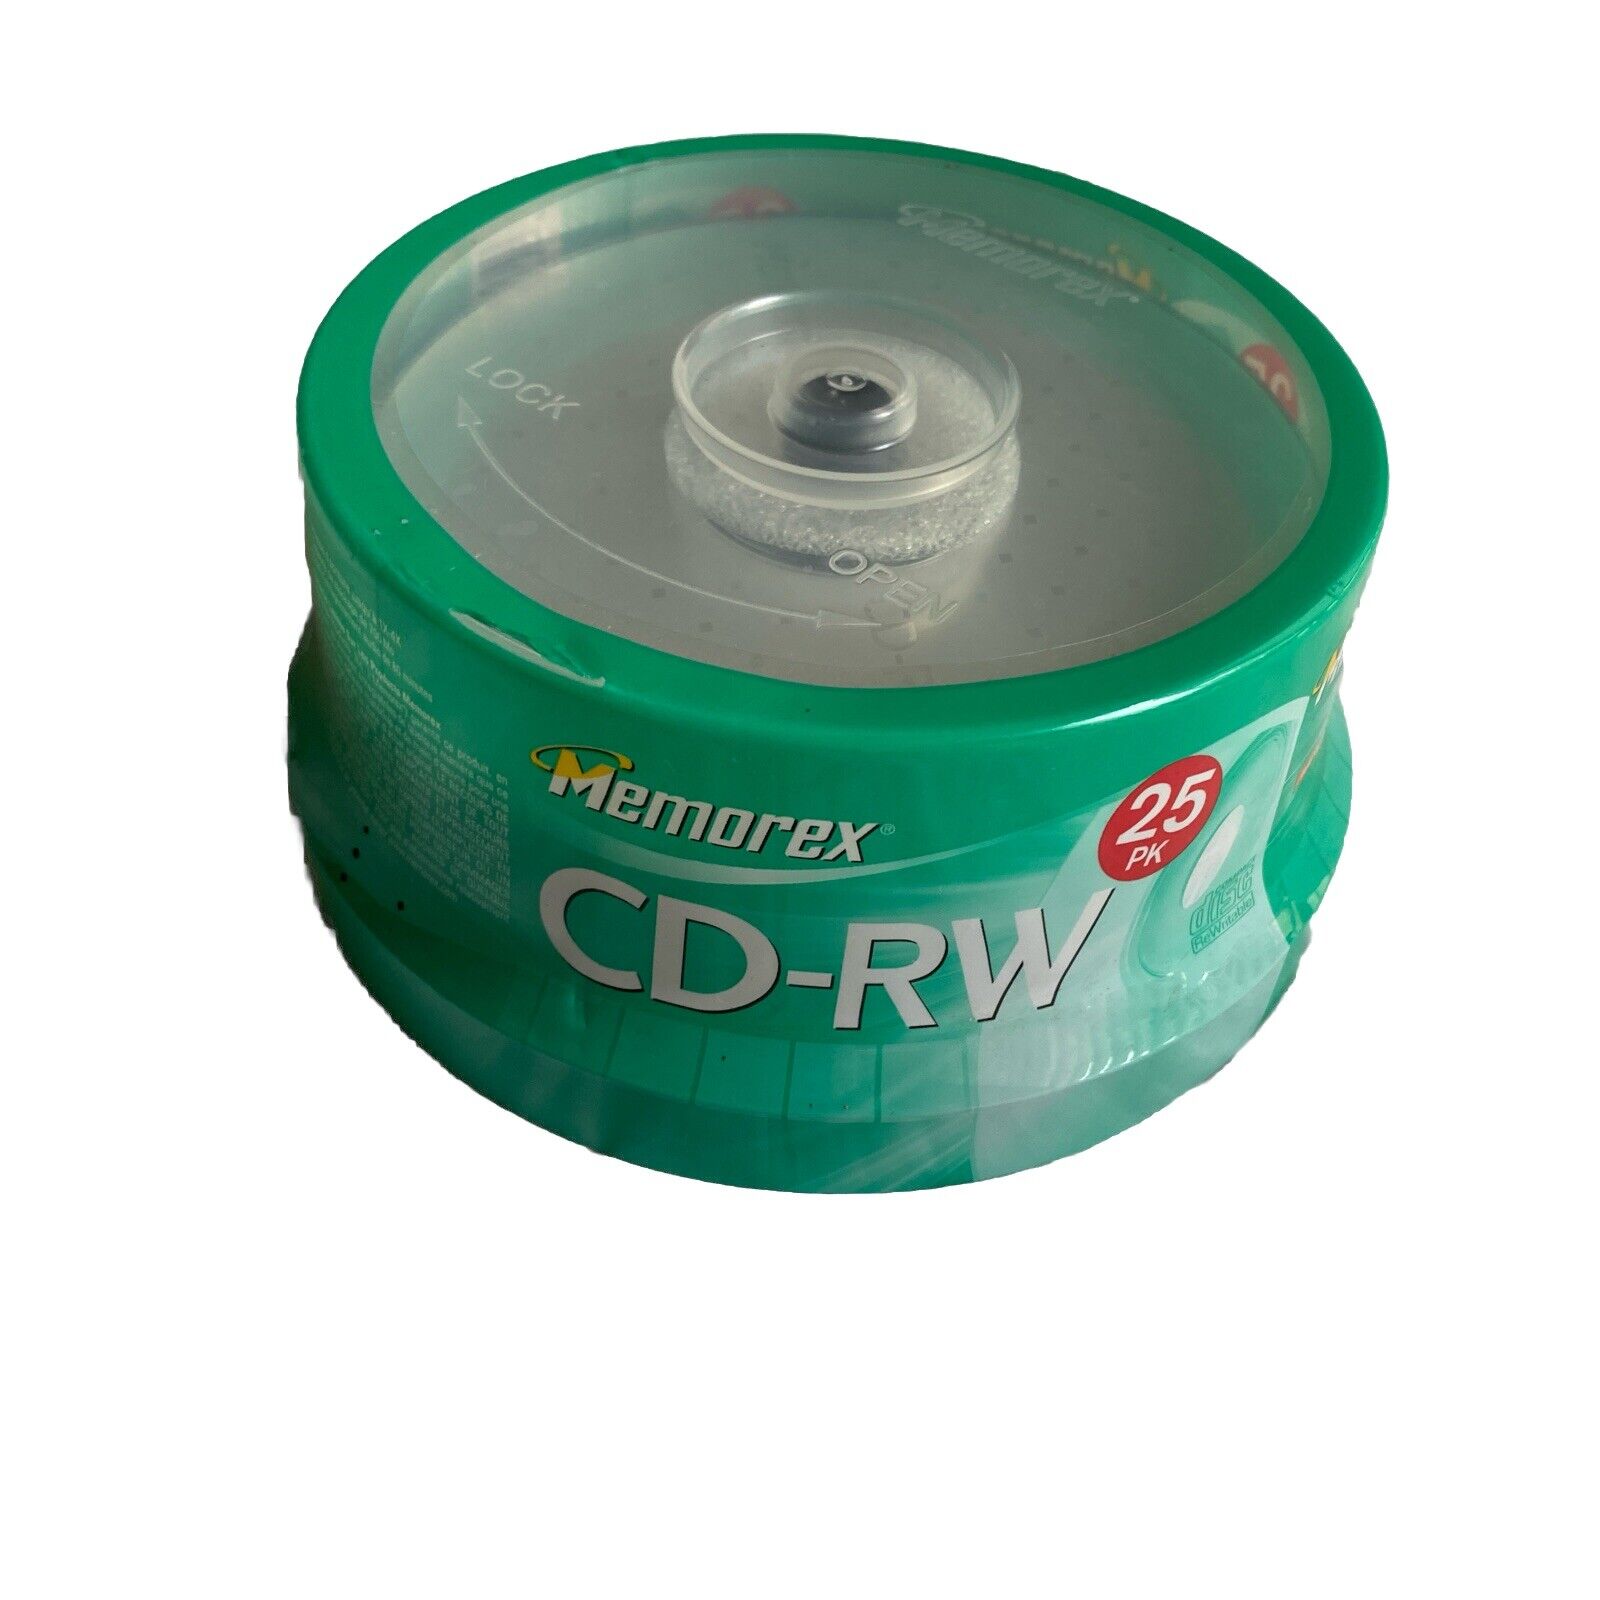 Memorex Ultra High Speed CD-RW 25pk